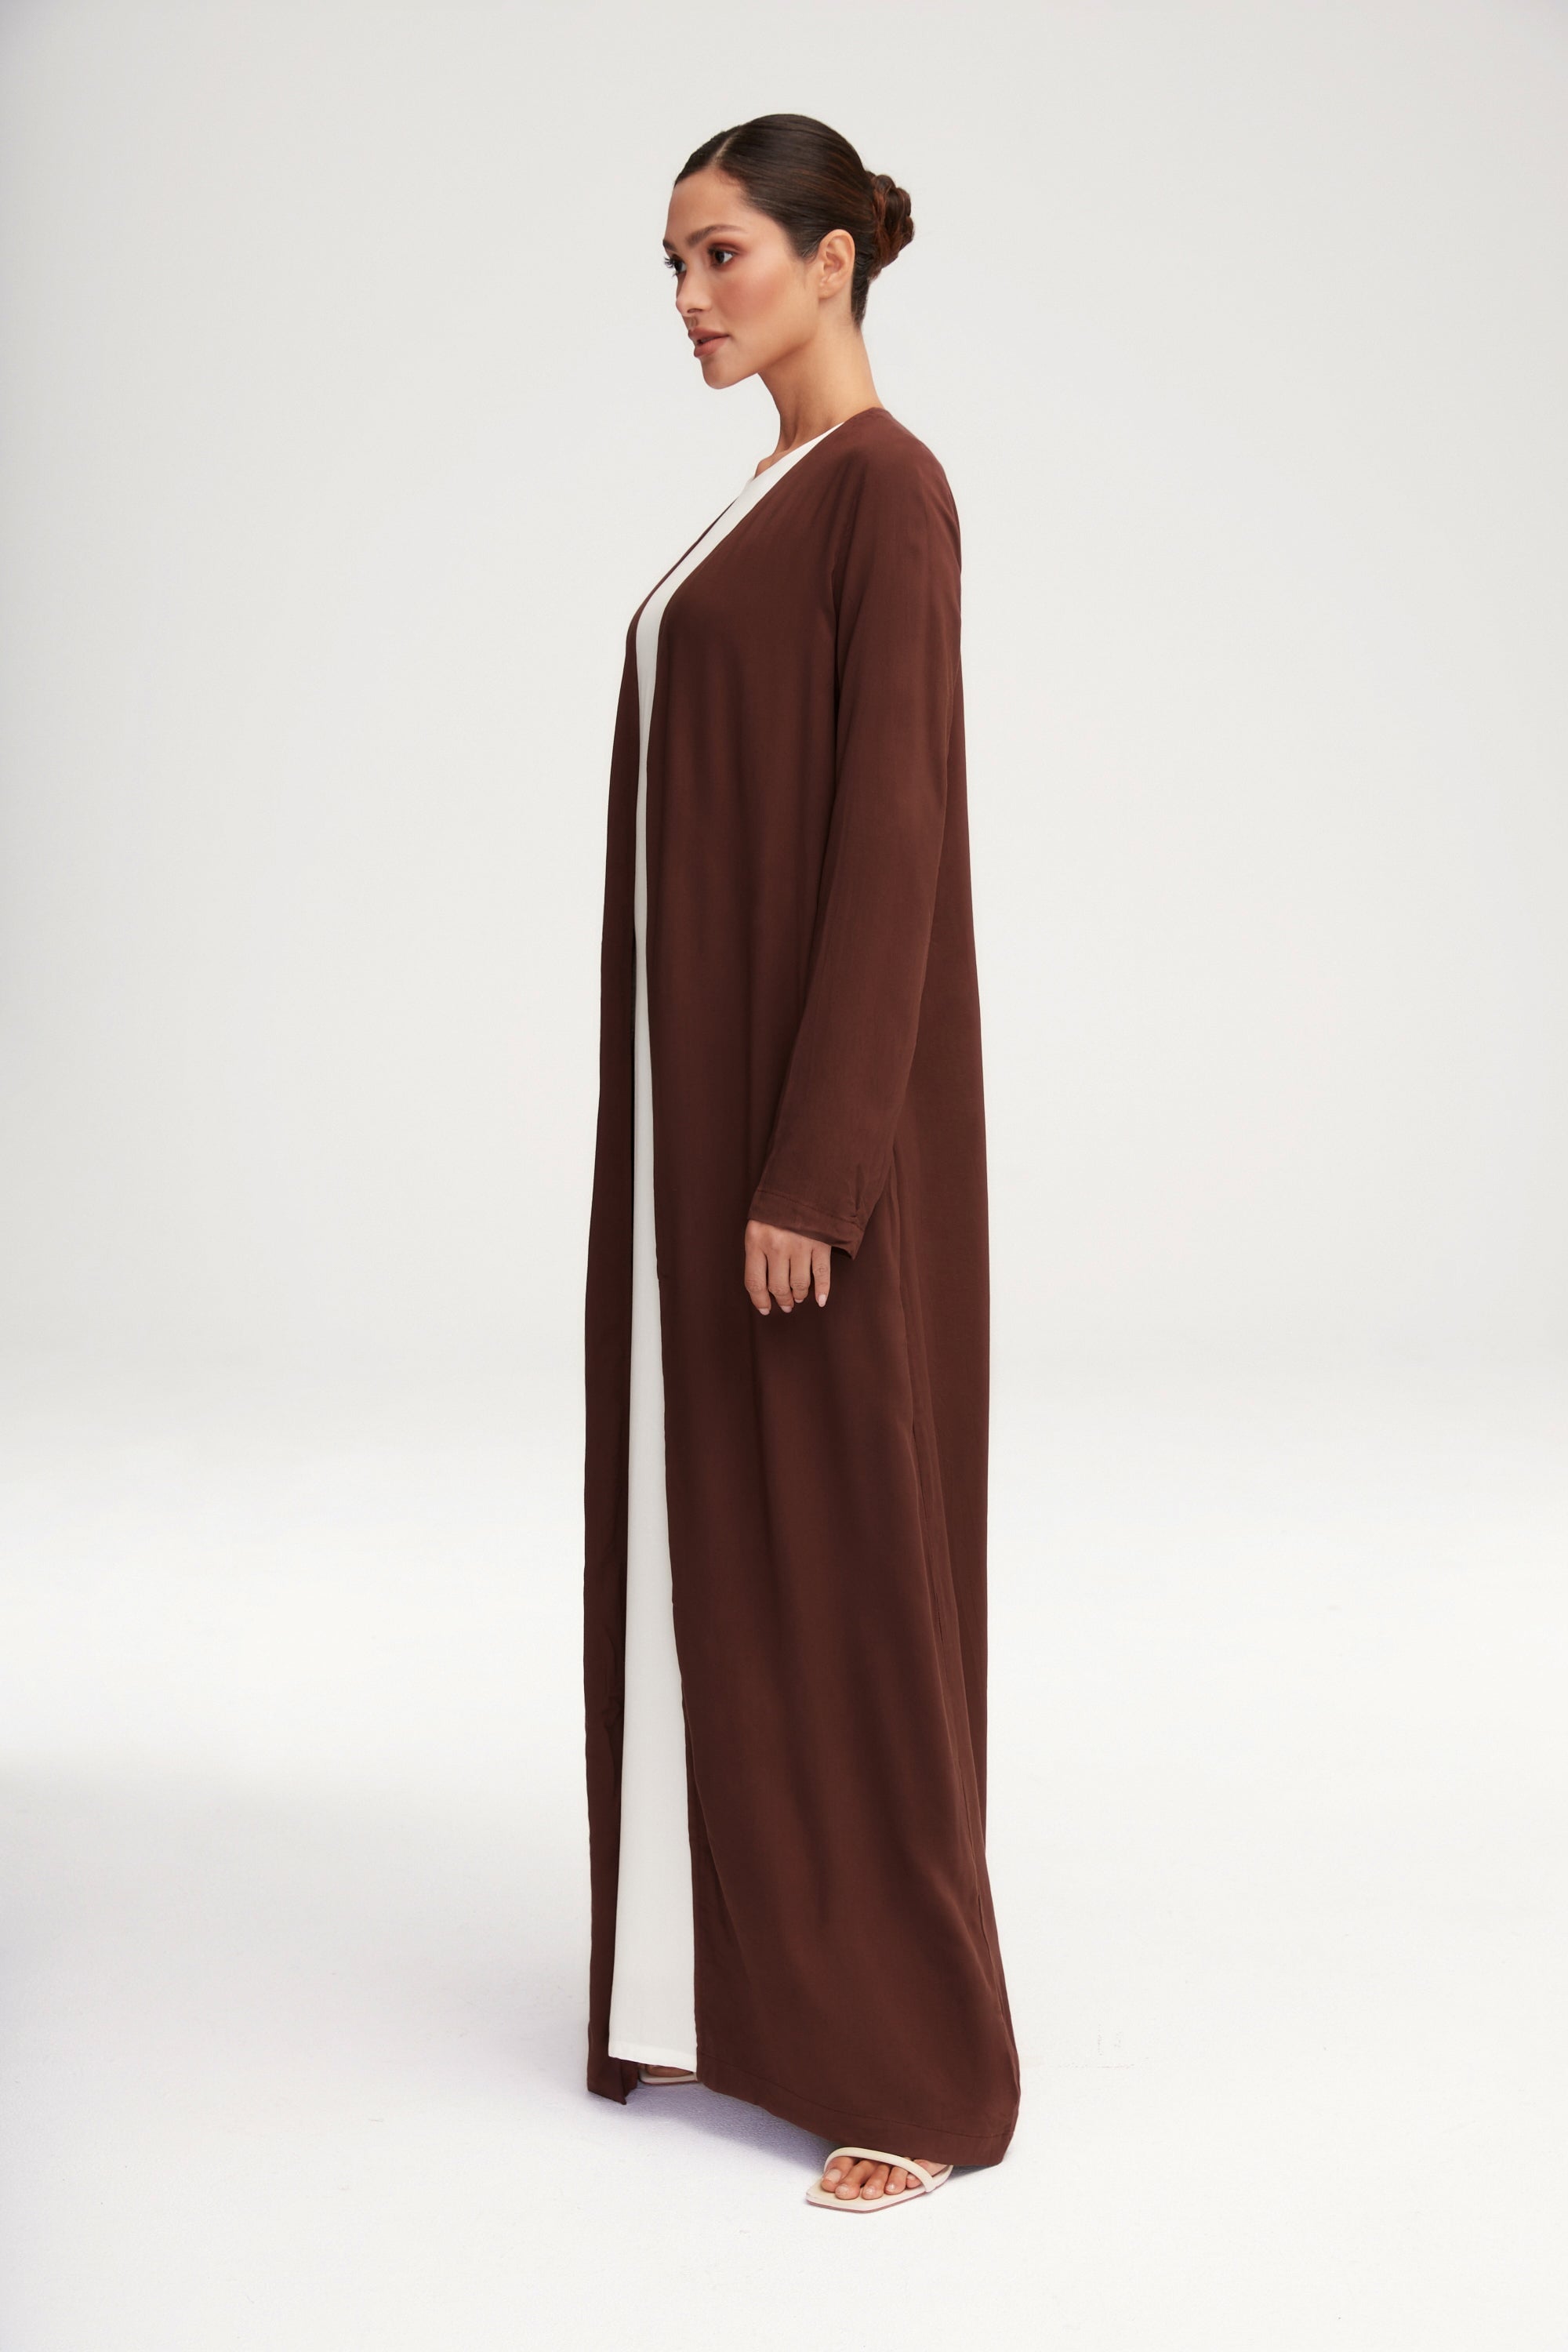 Essential Woven Open Abaya - Espresso Clothing Veiled 